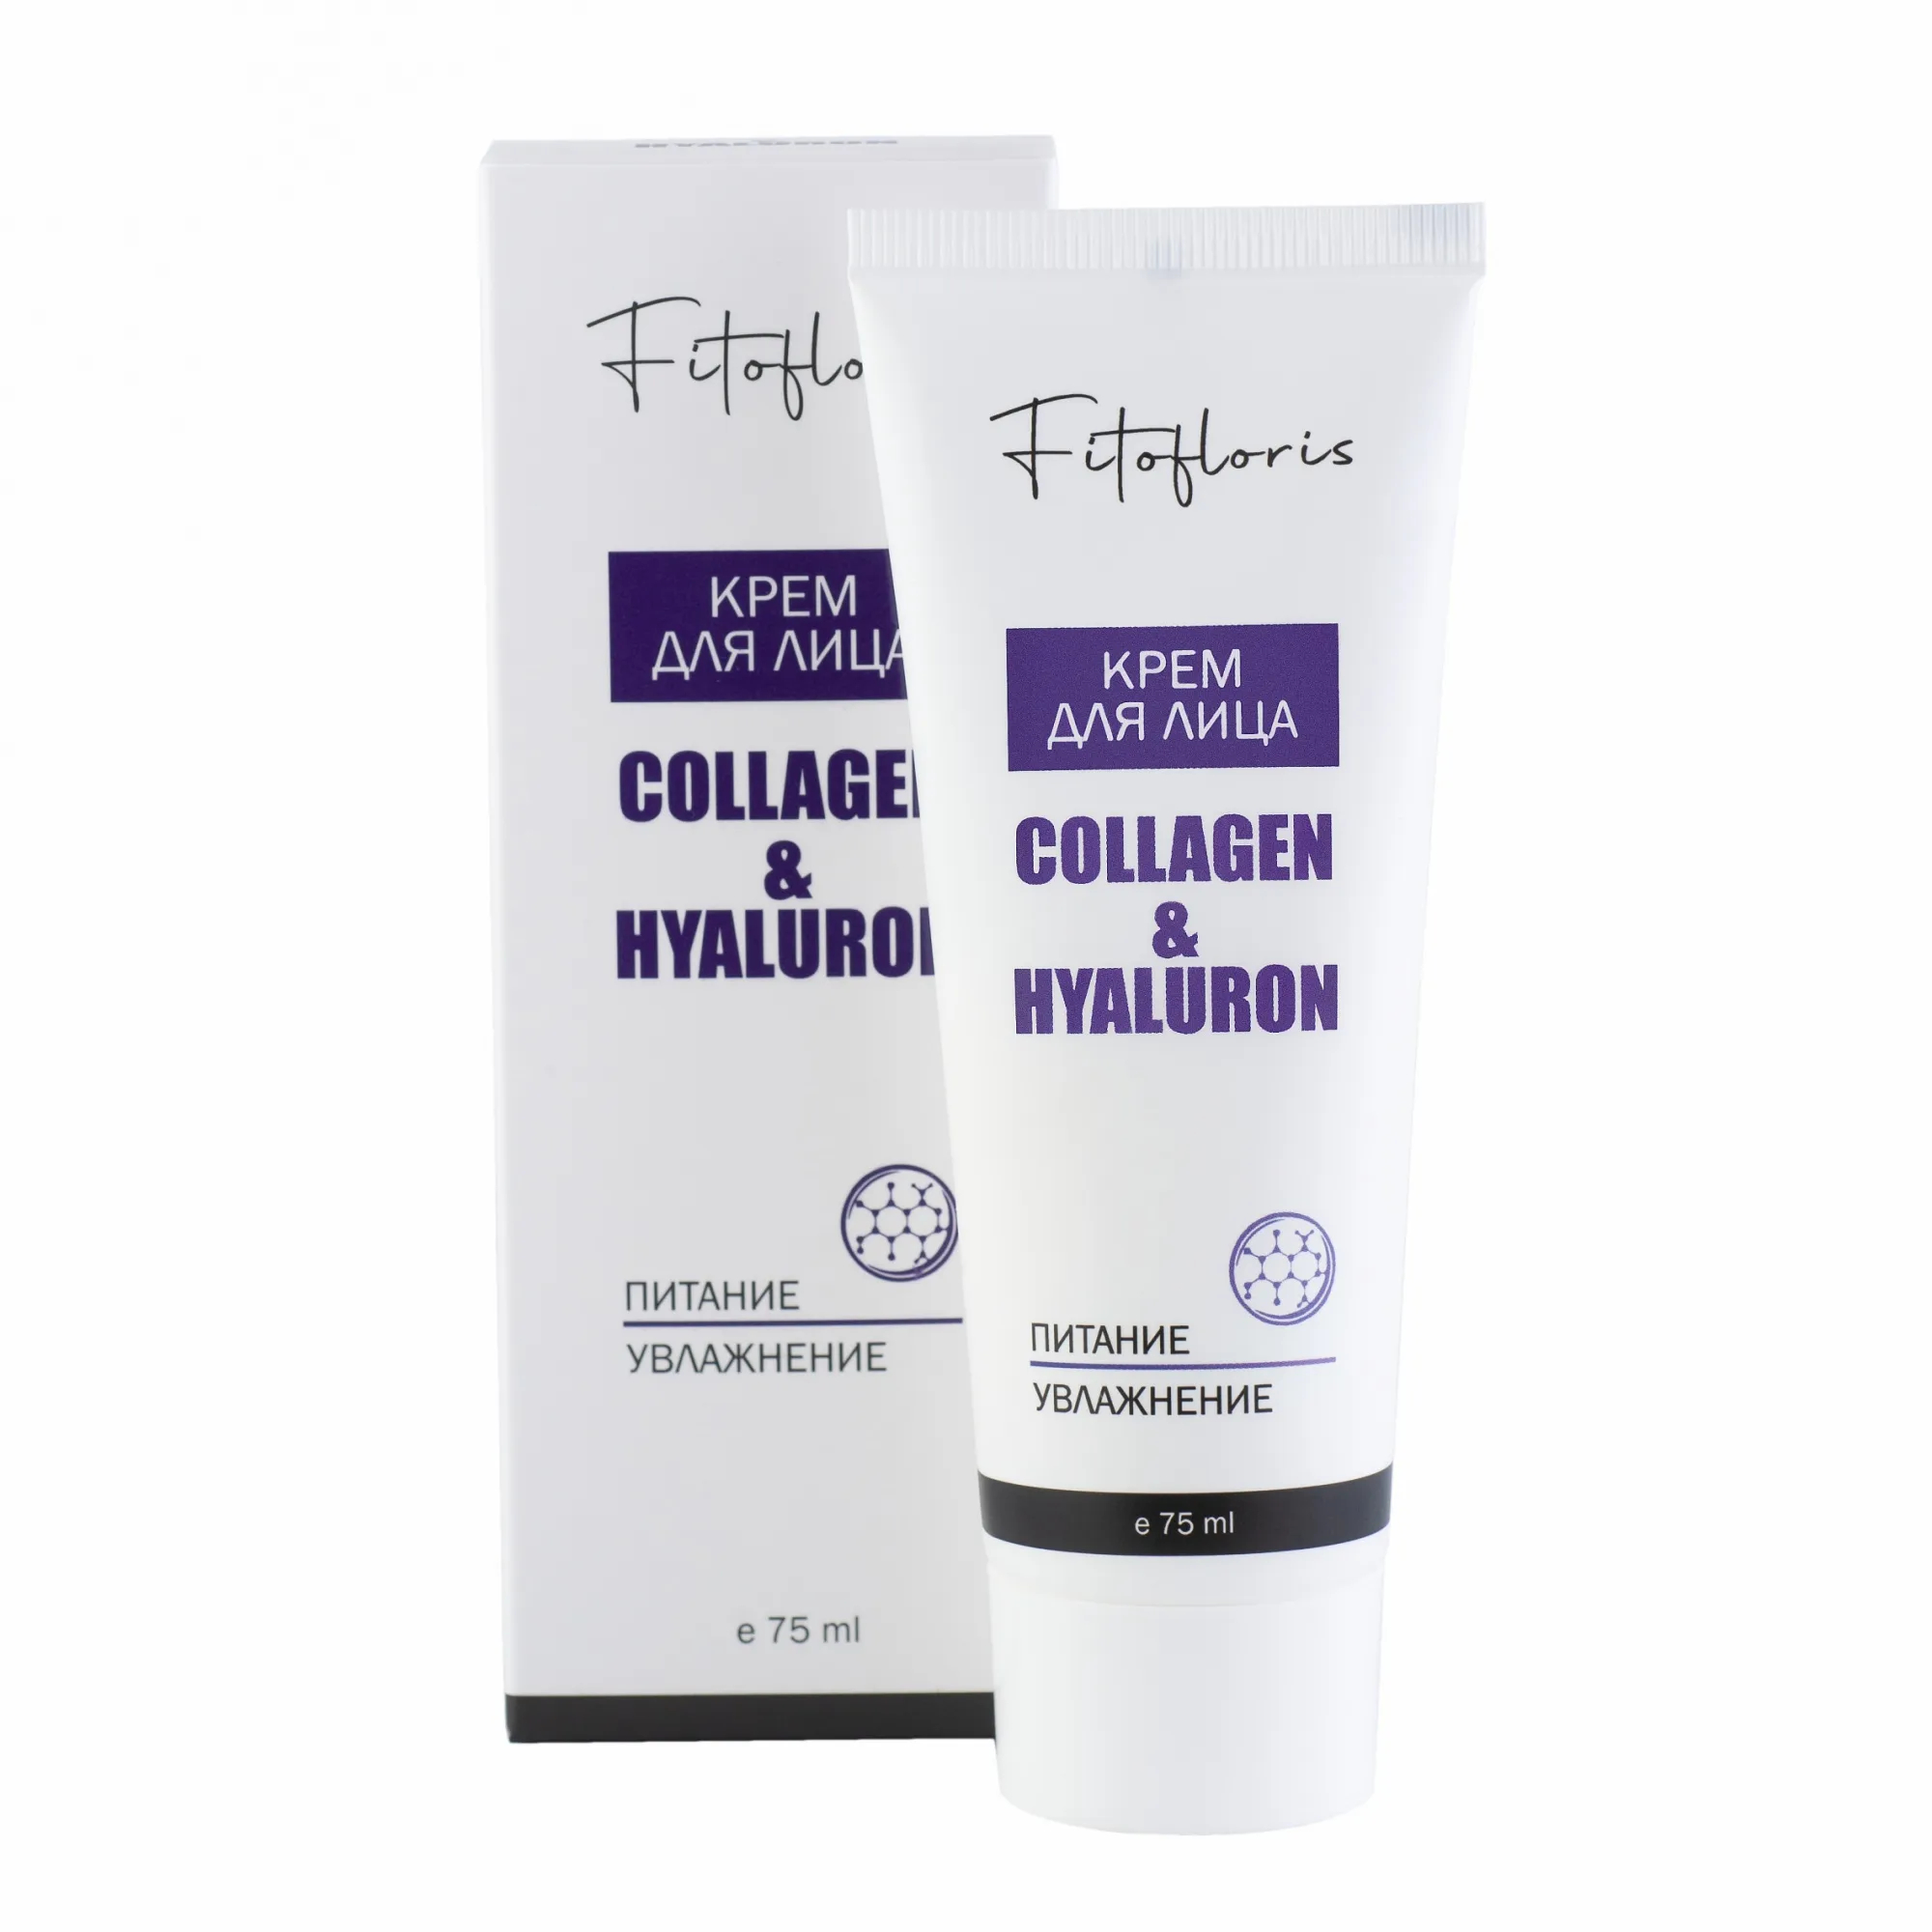 Крем для лица "Collagen&Hyaluron", 75 гр.